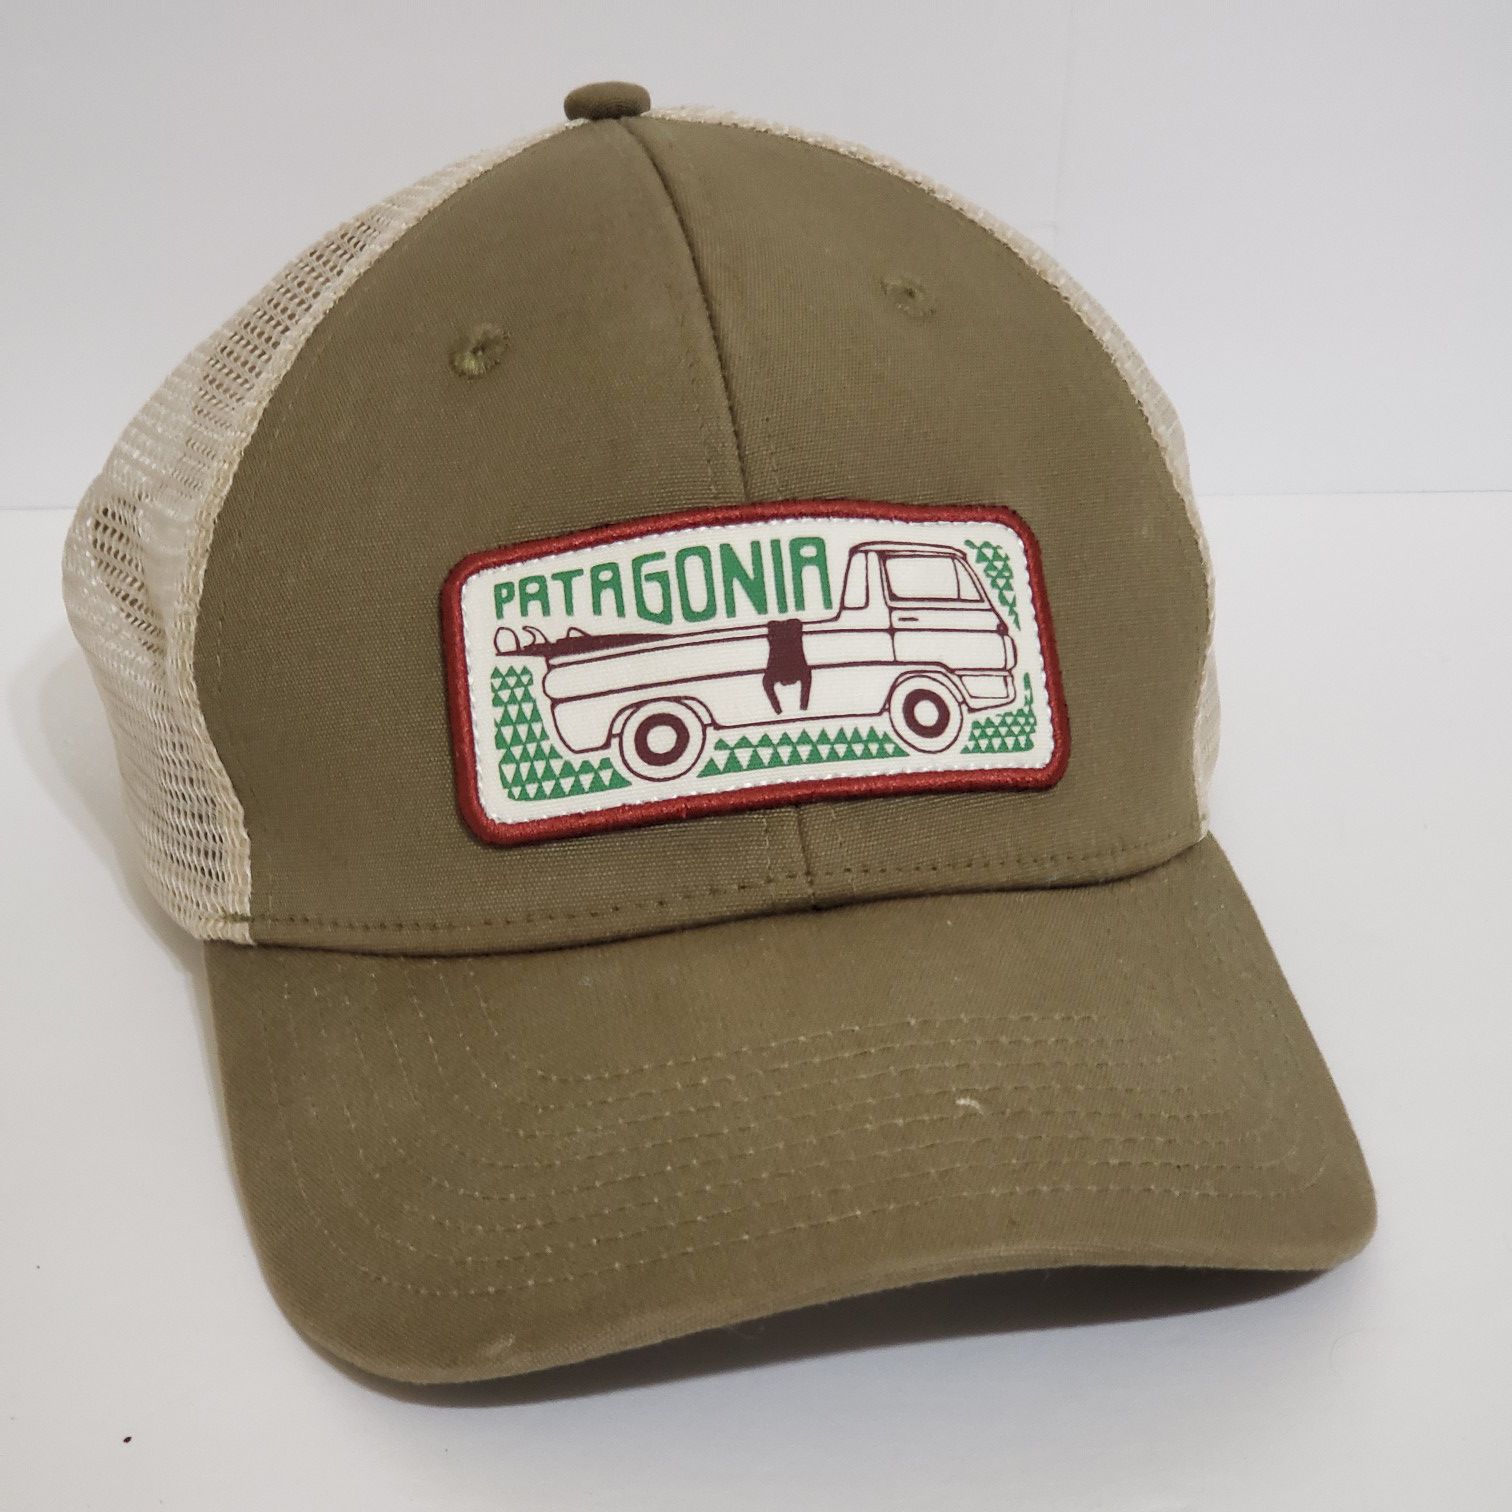 Patagonia Surf Van Caravan Mesh Trucker Hat Cap Olive Green Snapback RARE!